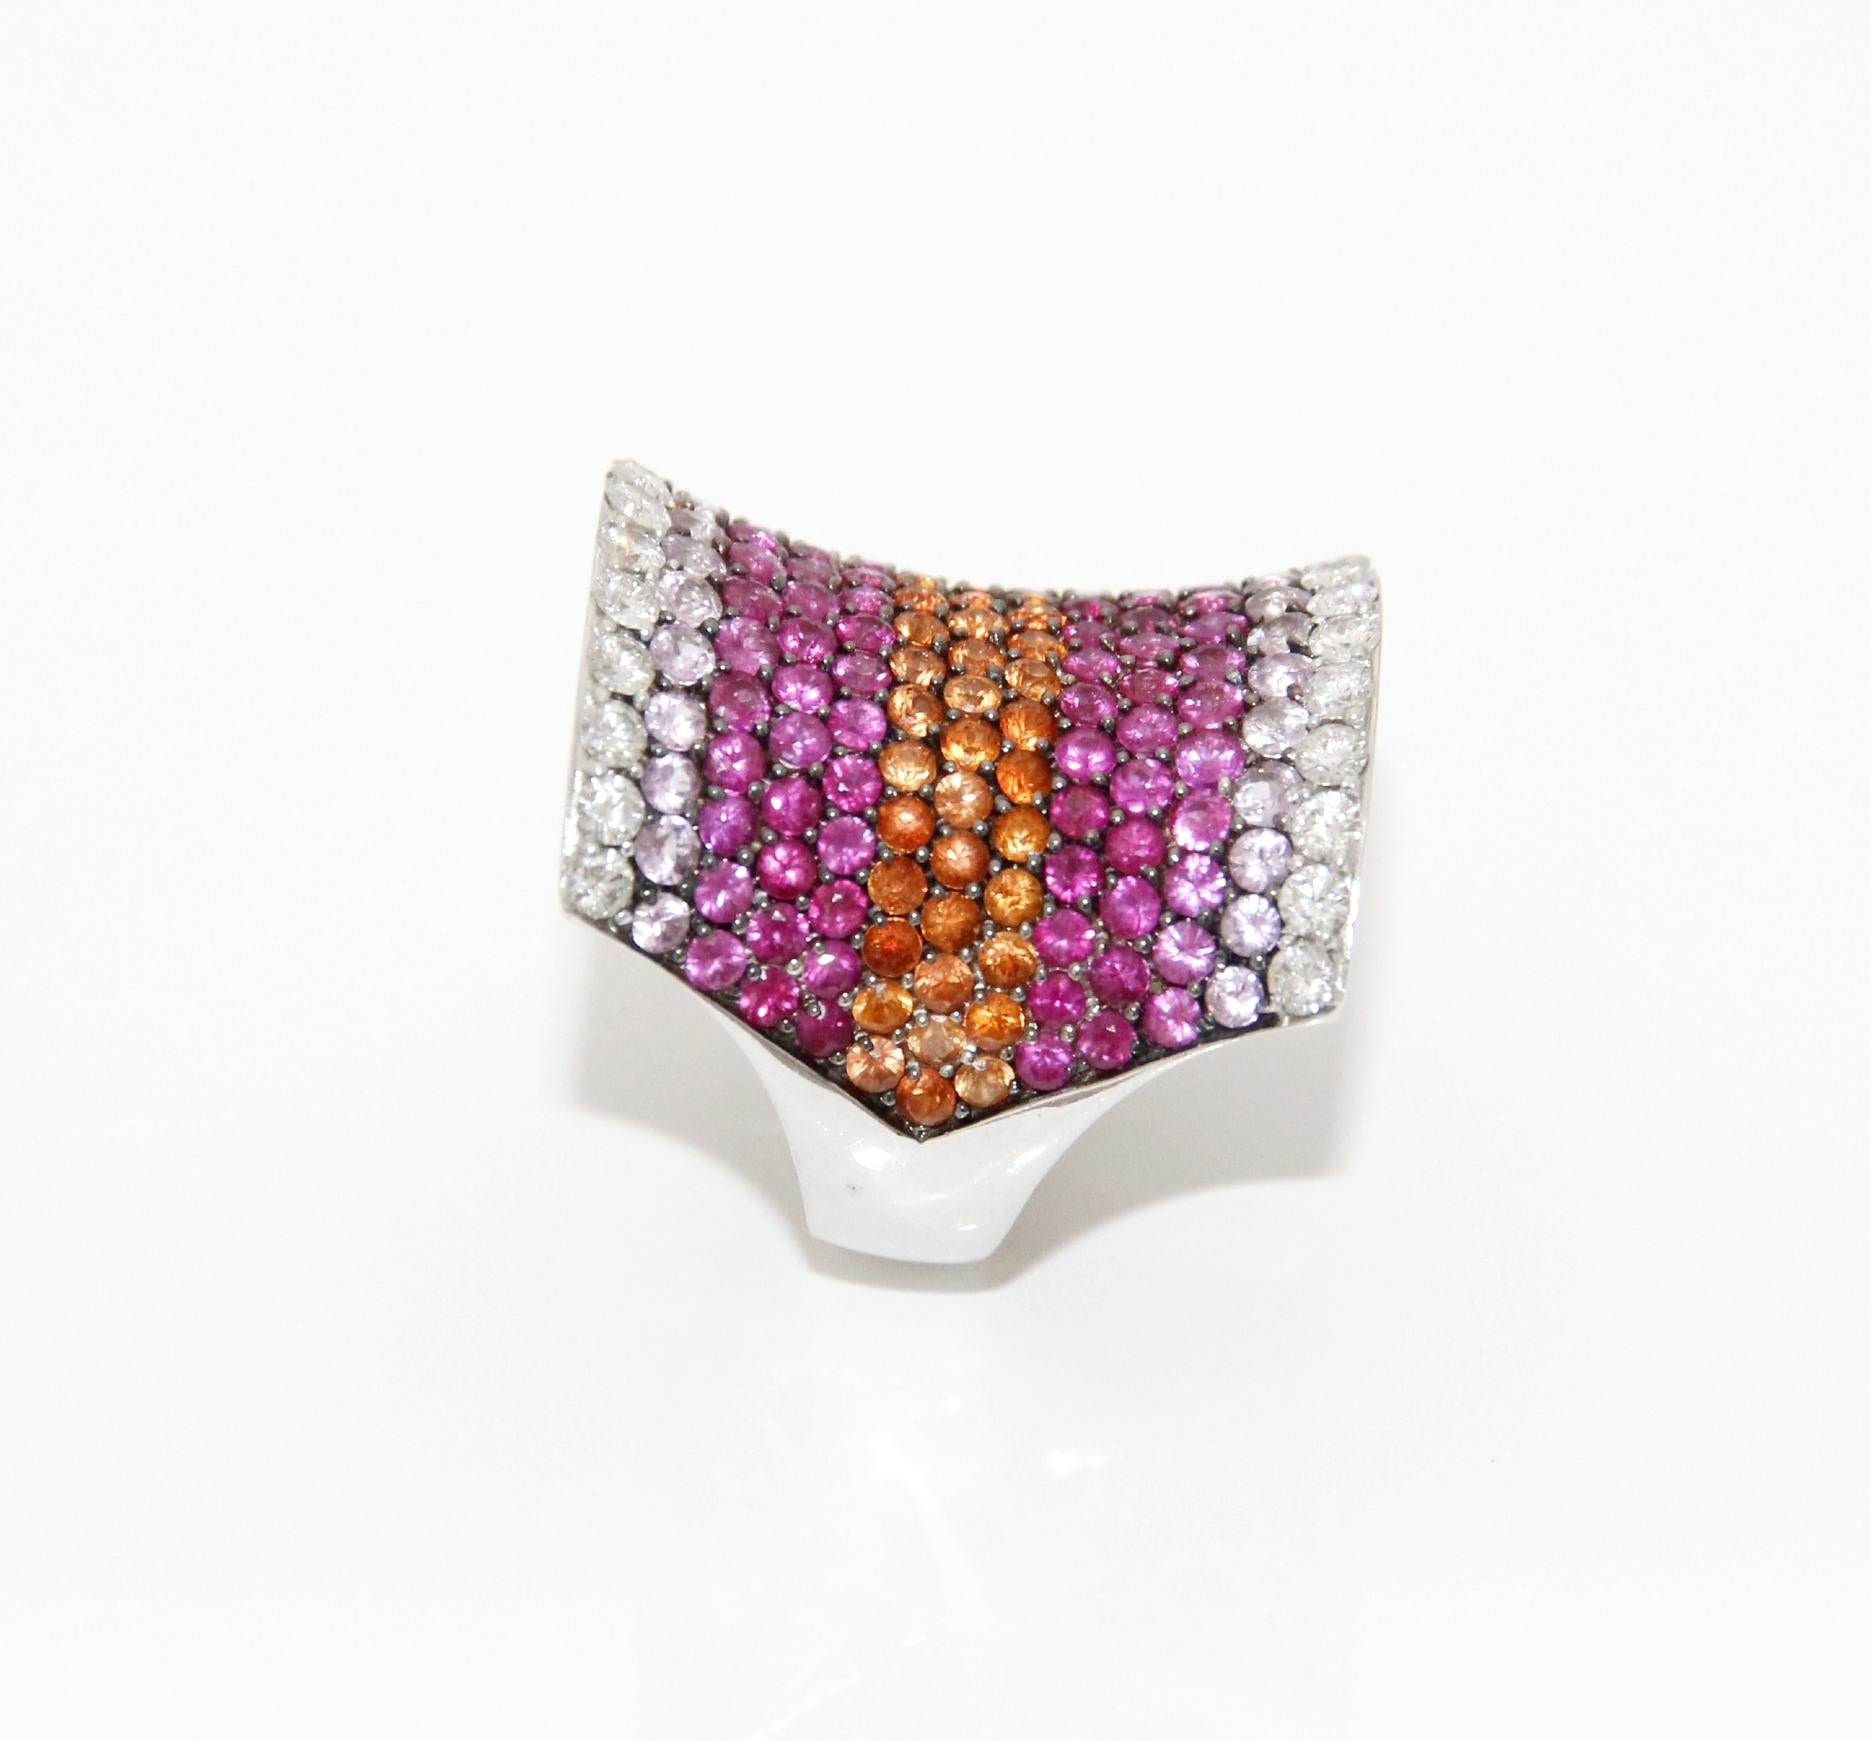 Stefan Hafner 18k White Gold Diamonds and Pink Sapphires Ring
Diamonds 1.31ctw
Sapphires 4.9ctw
Size 7.5ctw
Retail $20,900.00


